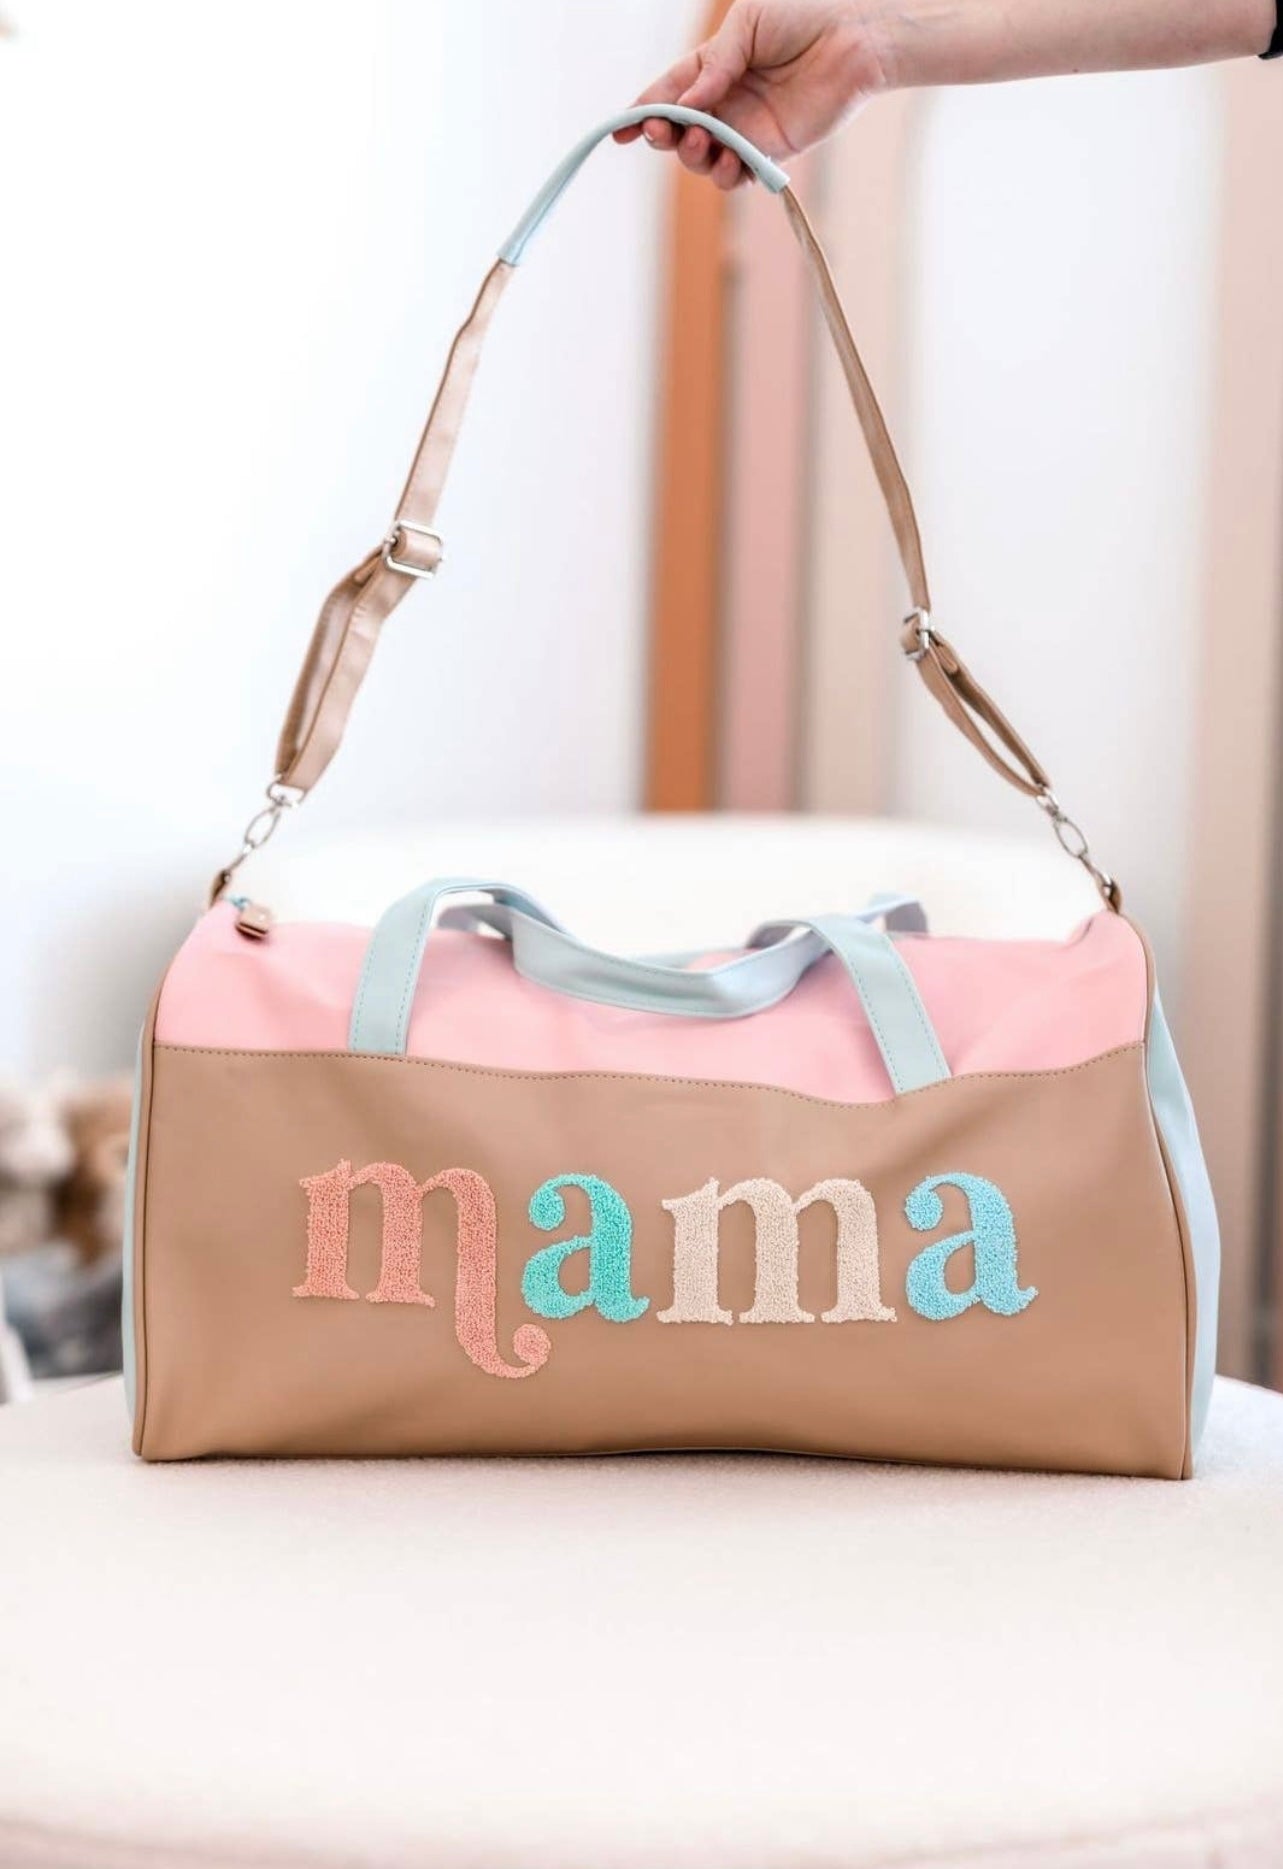 Mama Duffel Bag